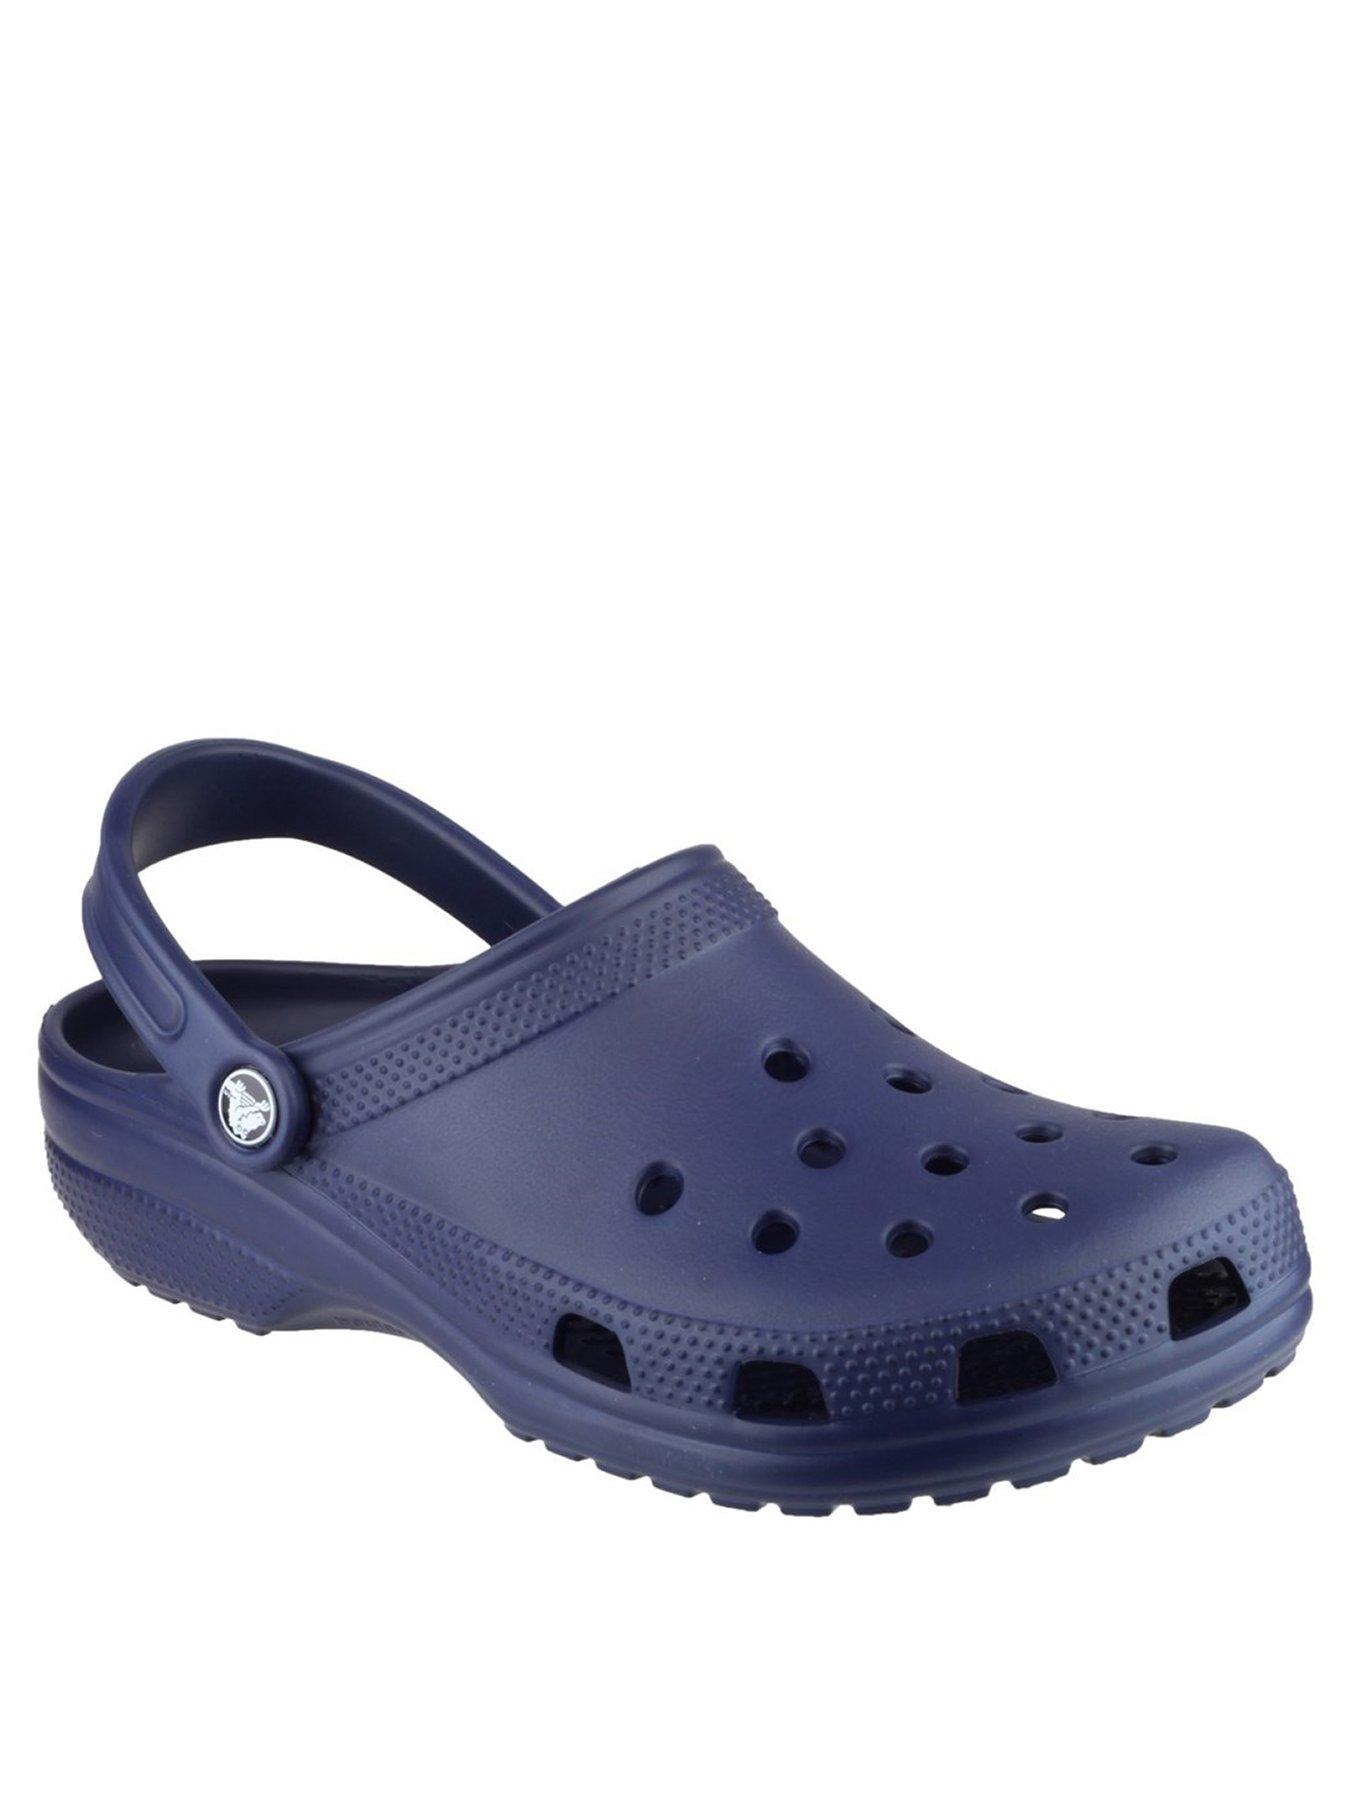 buy crocs shoes